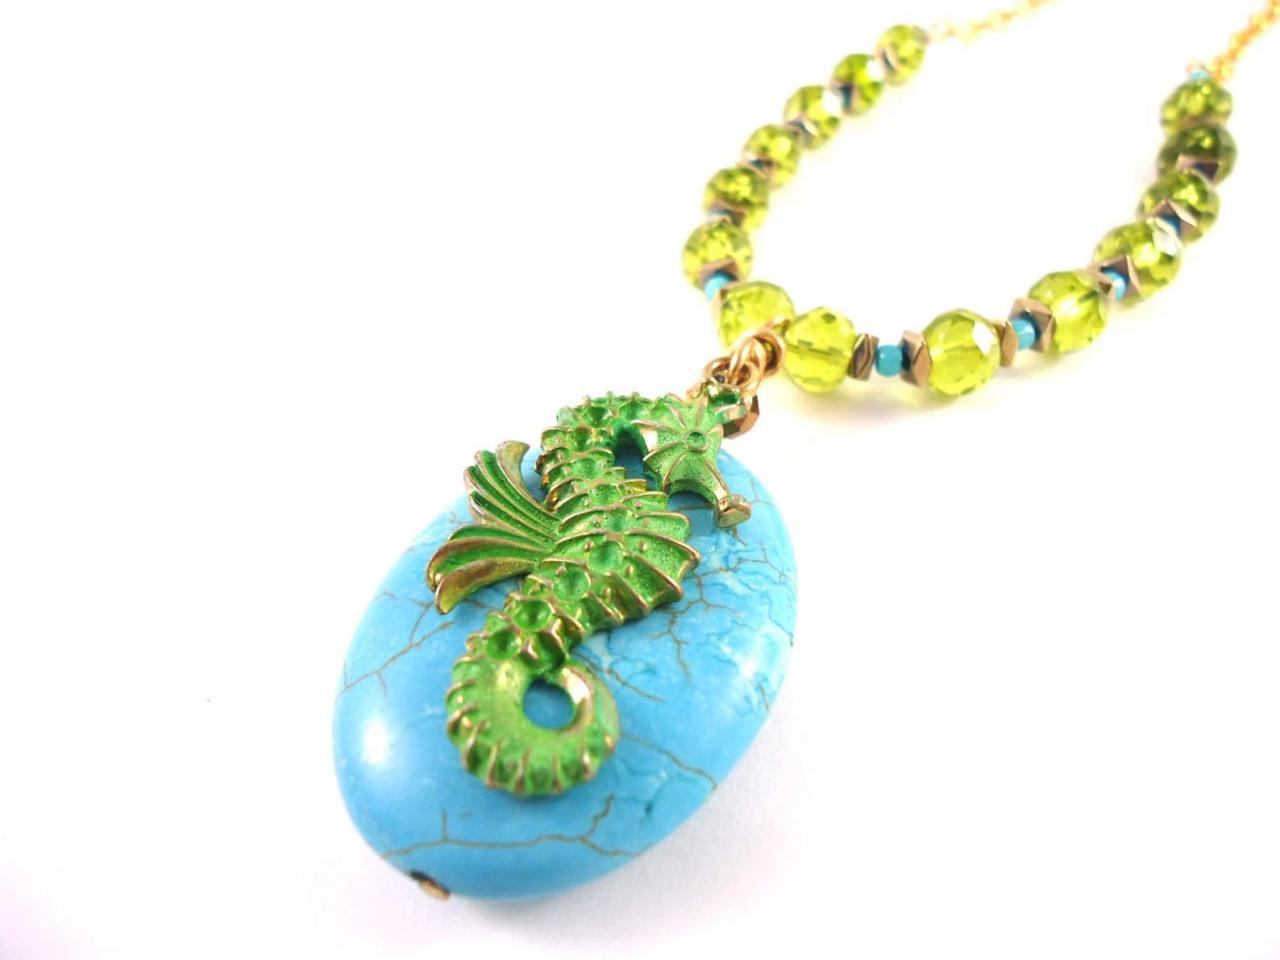 Seahorse Necklace - Summer Jewelry Trend - Mermaid Necklace - Beach Jewelry Women - Beach Jewelry Ideas - Blue Beach Jewelry - Blue Ocean